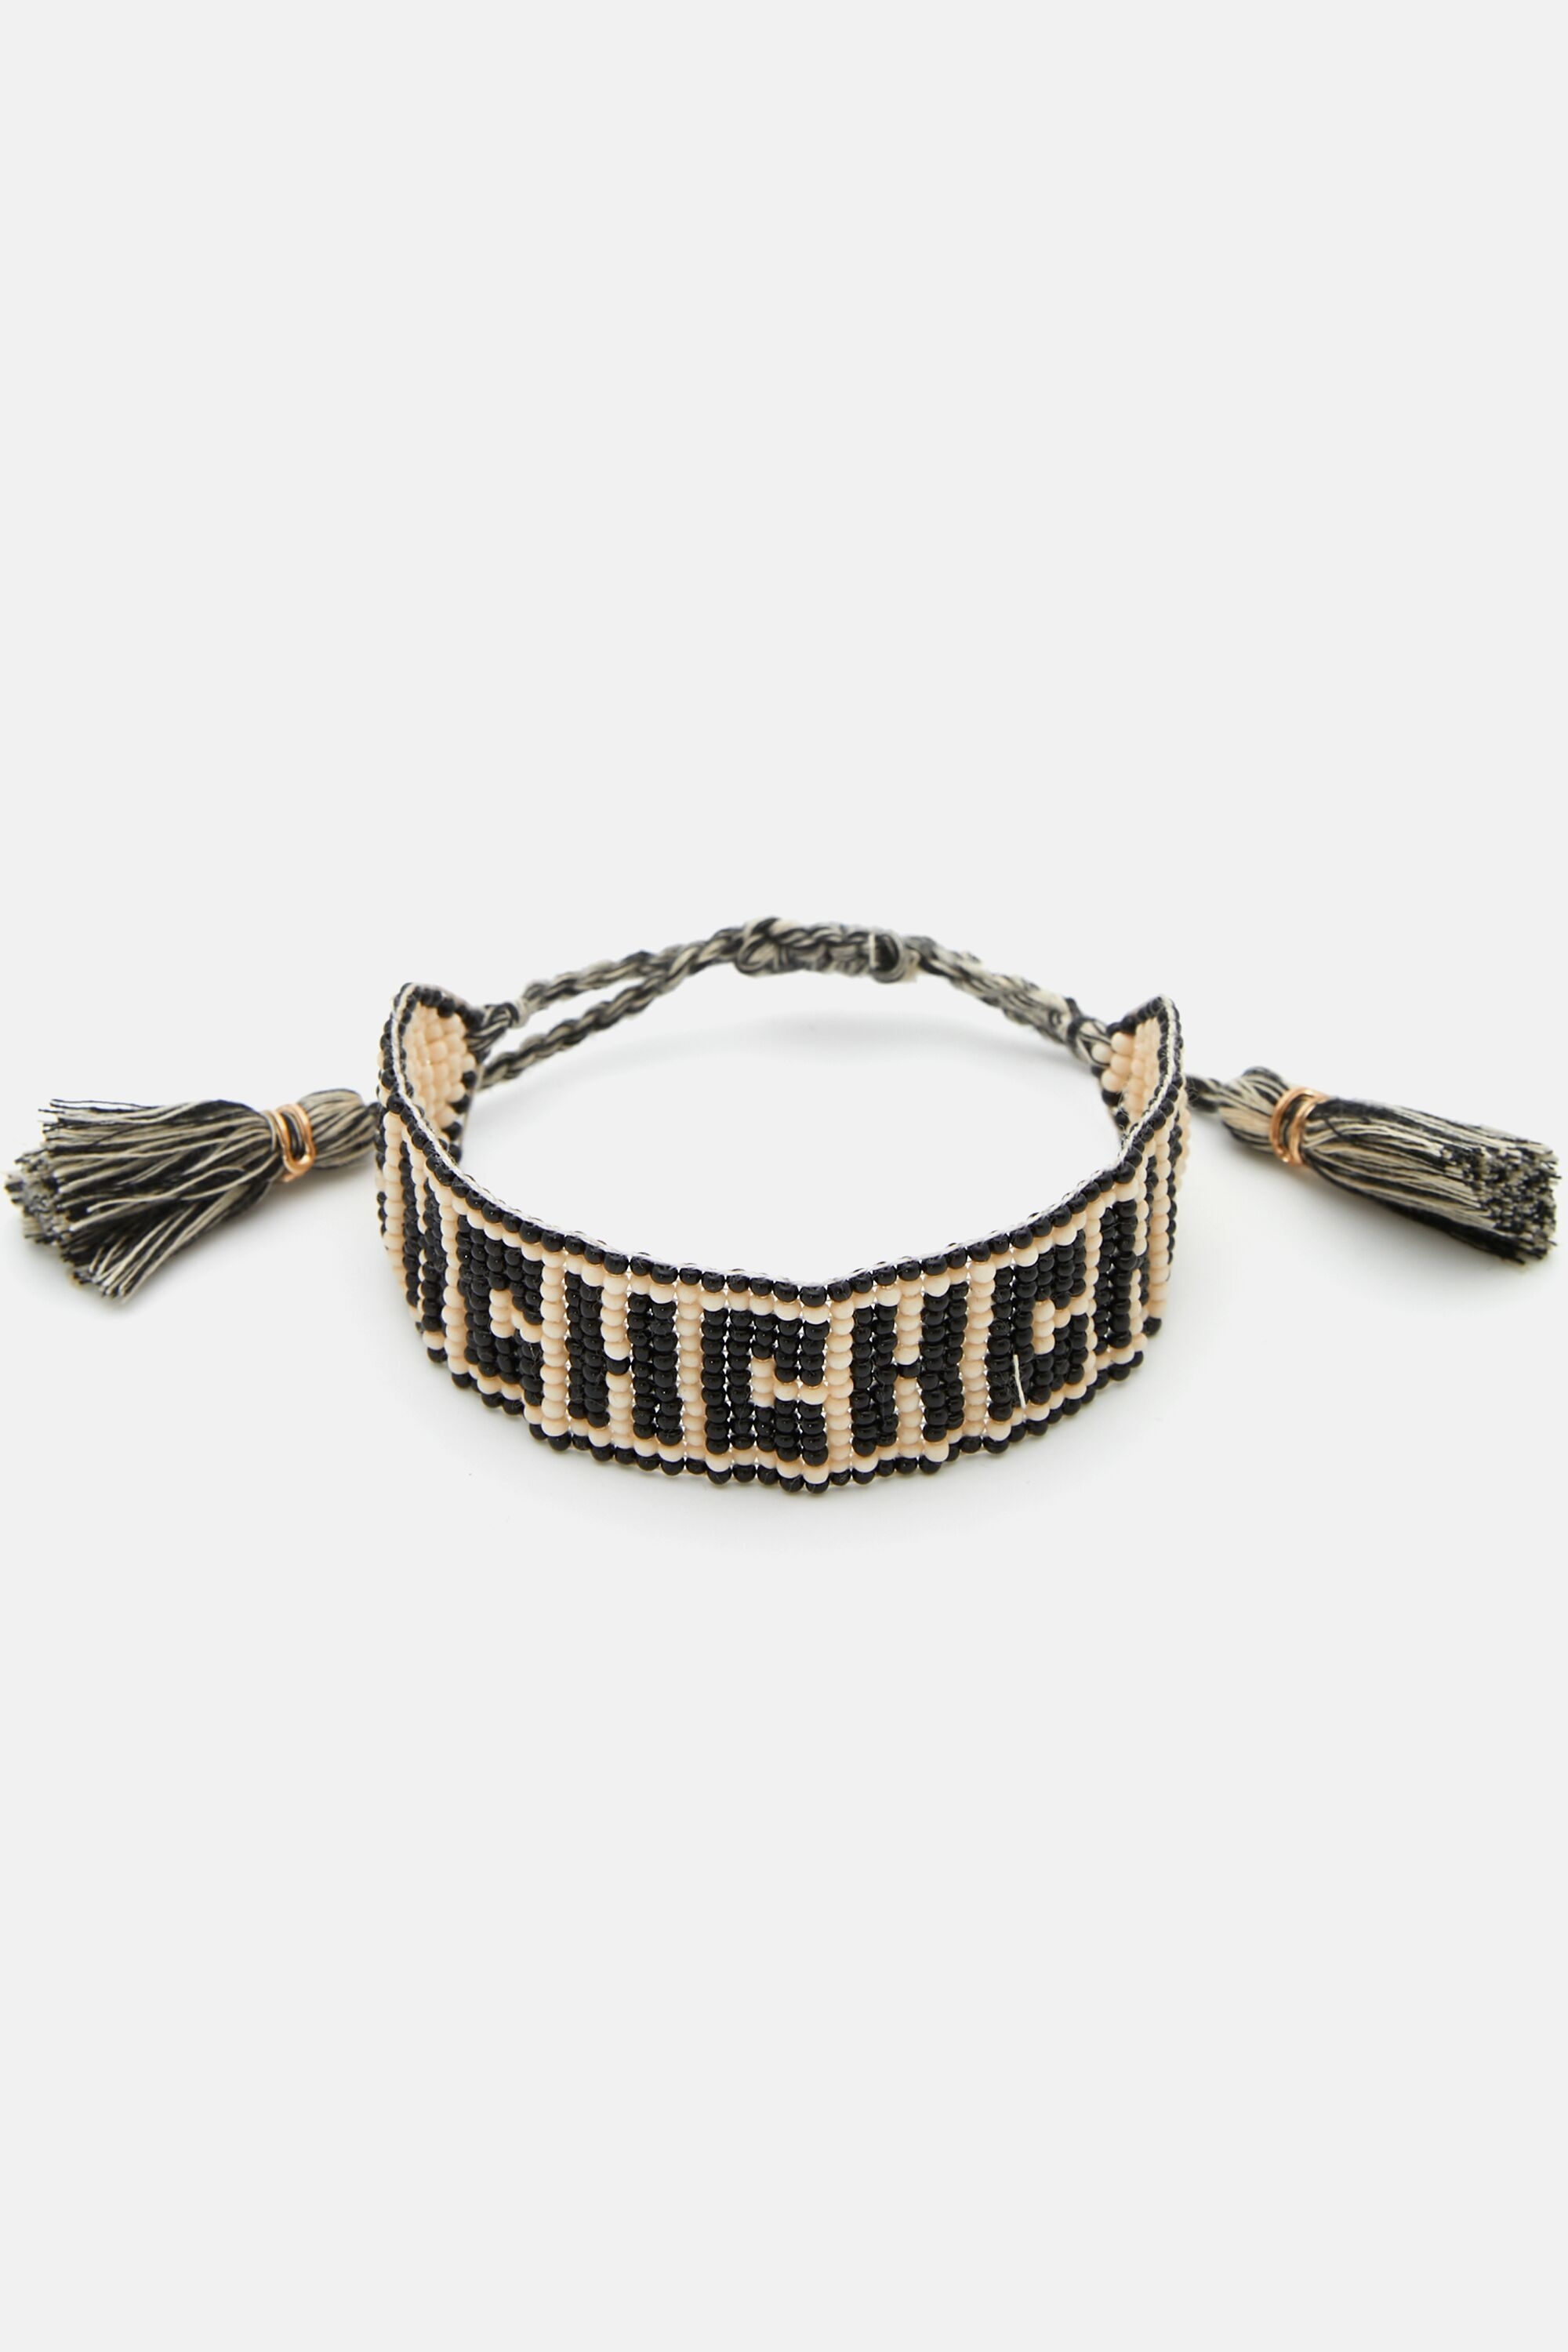 CH Chic bracelet